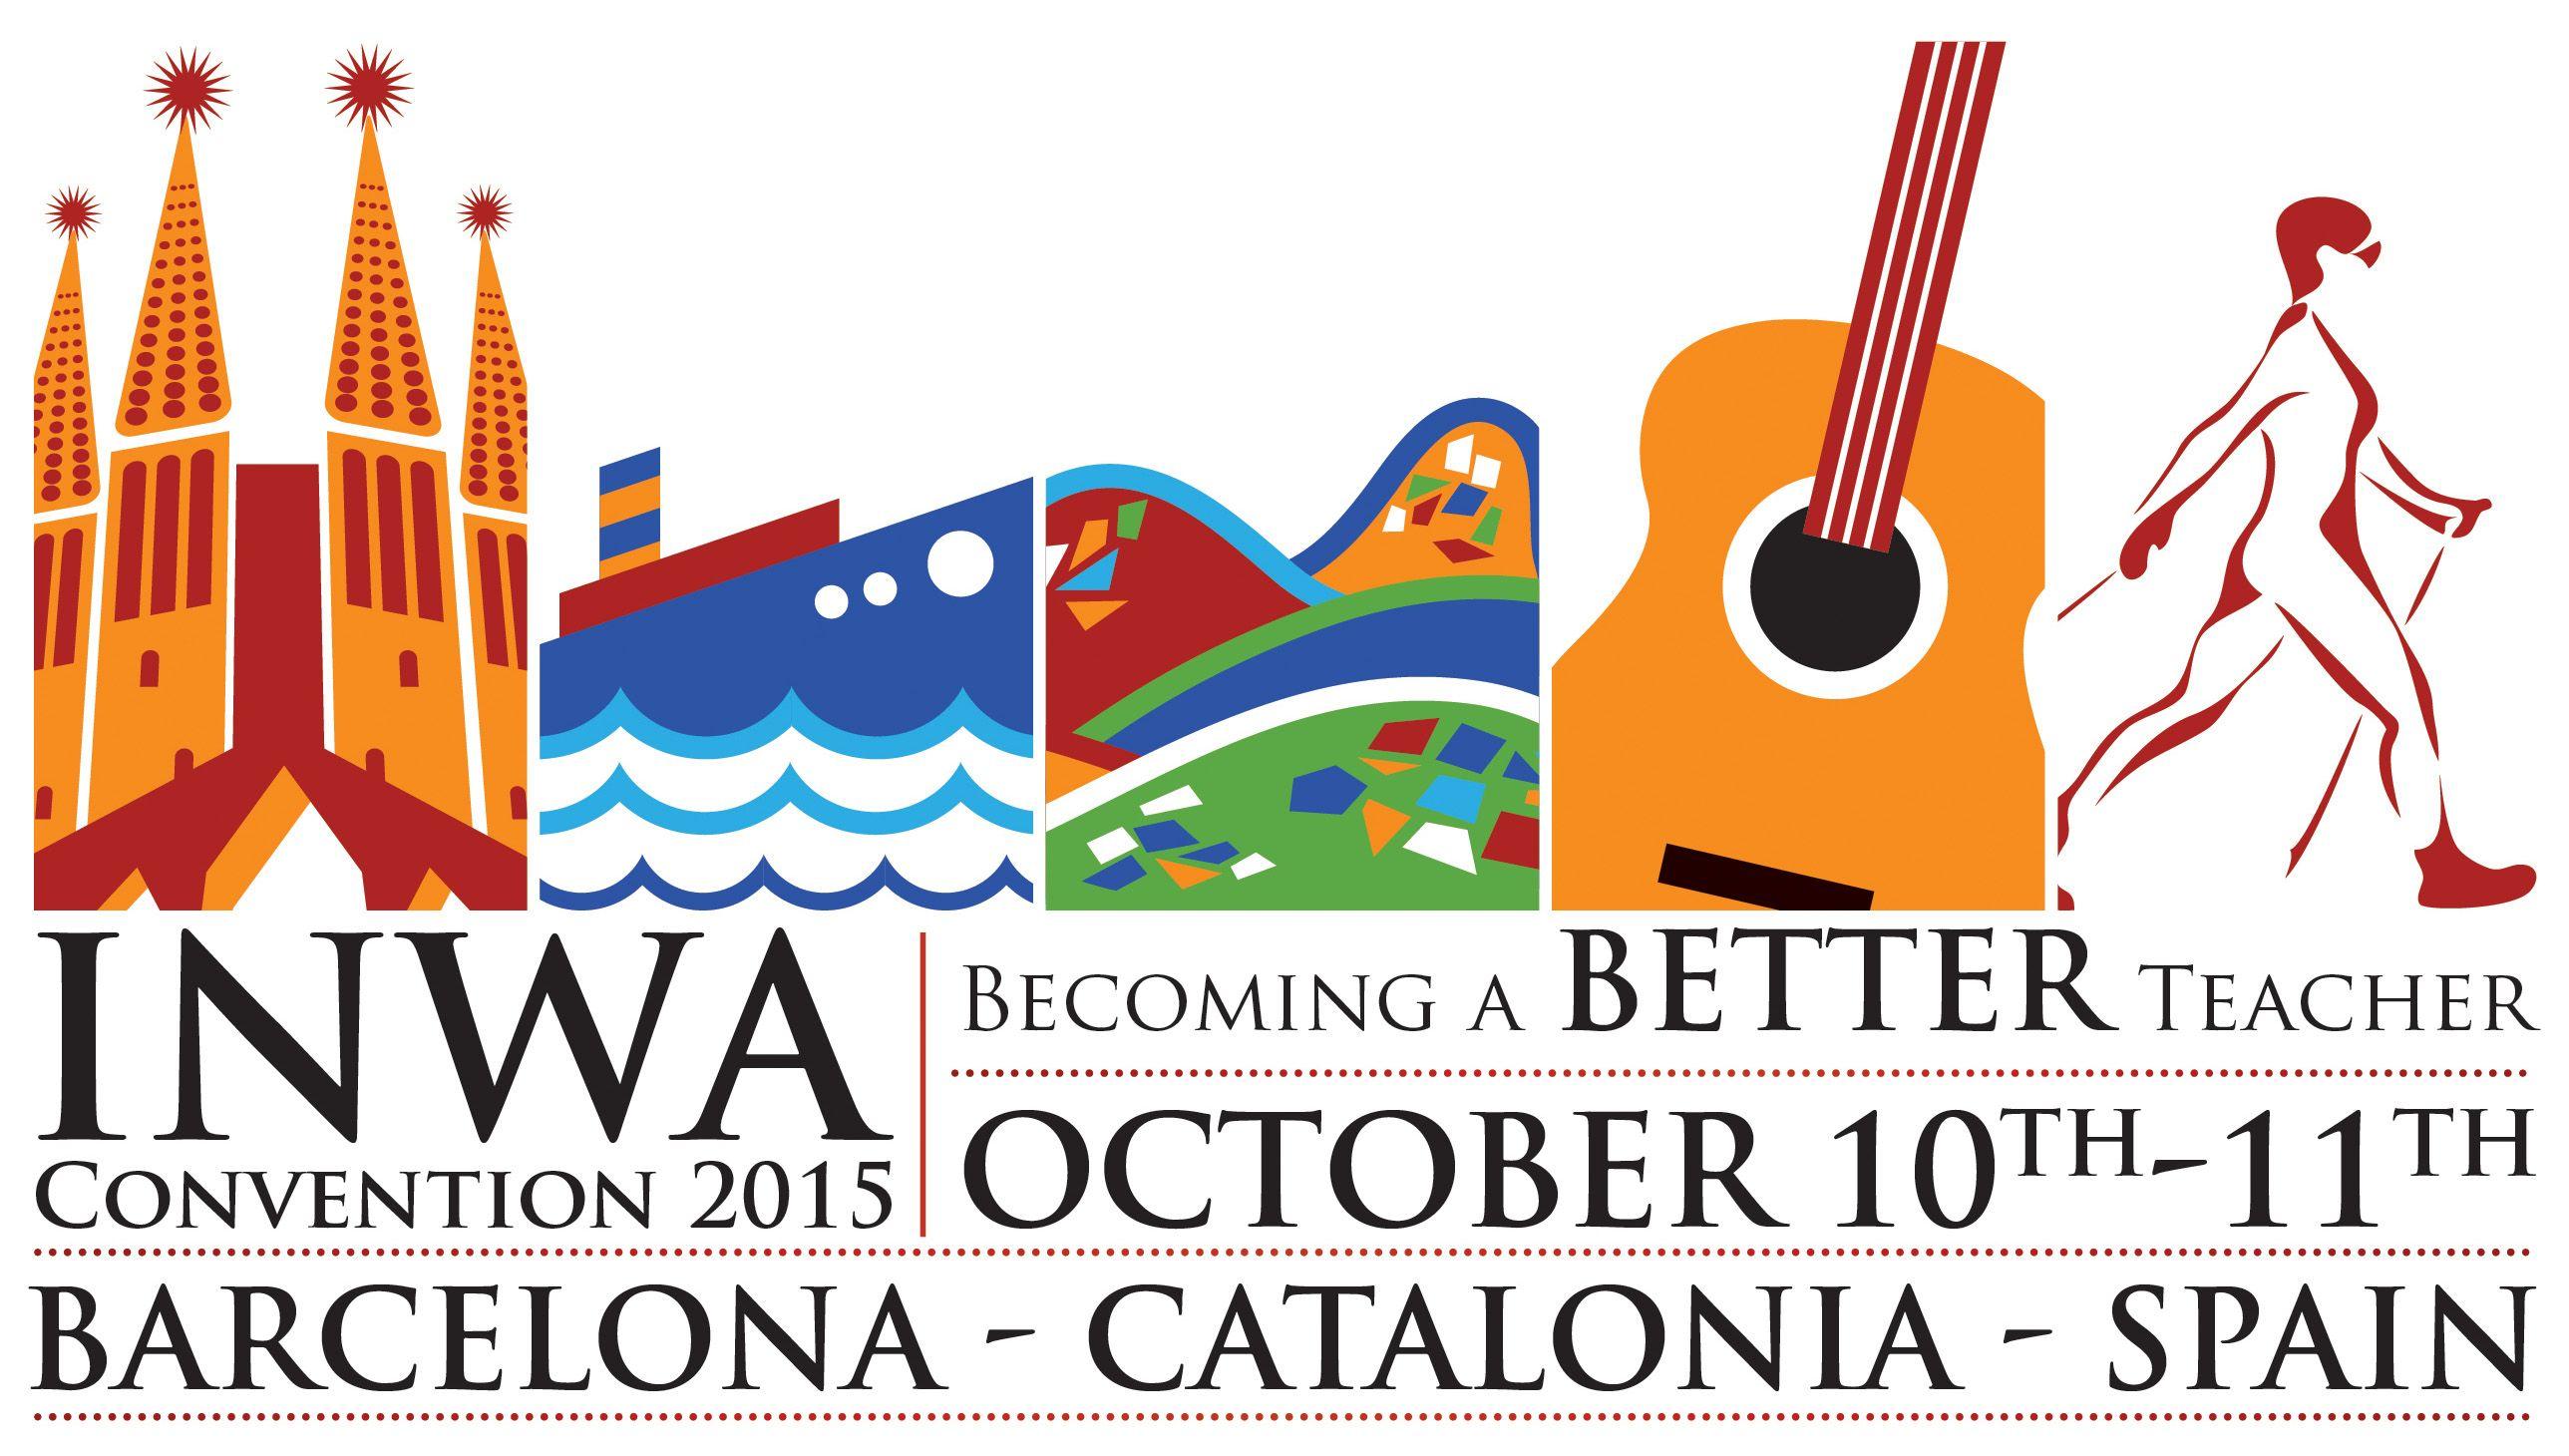 Convention Logo - INWA Convention 2015